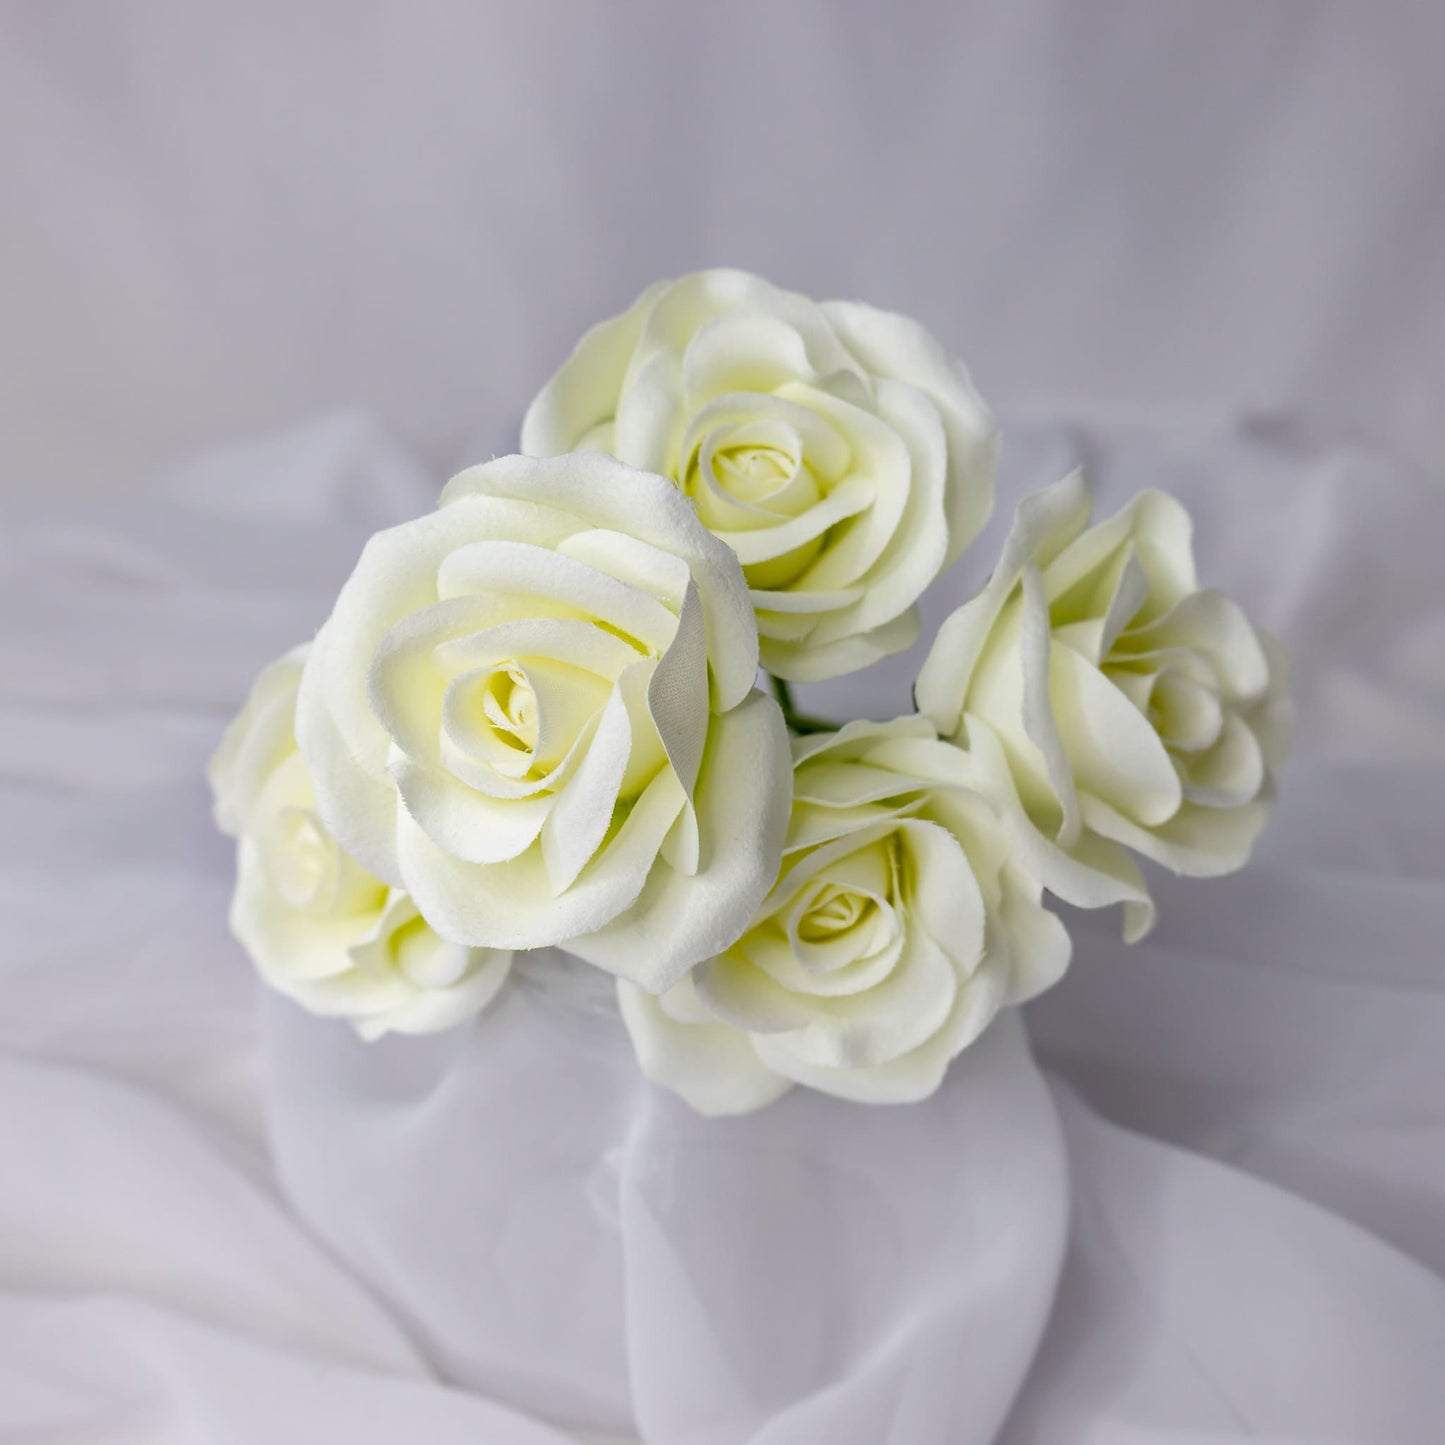 artificial white velveeten roses top view